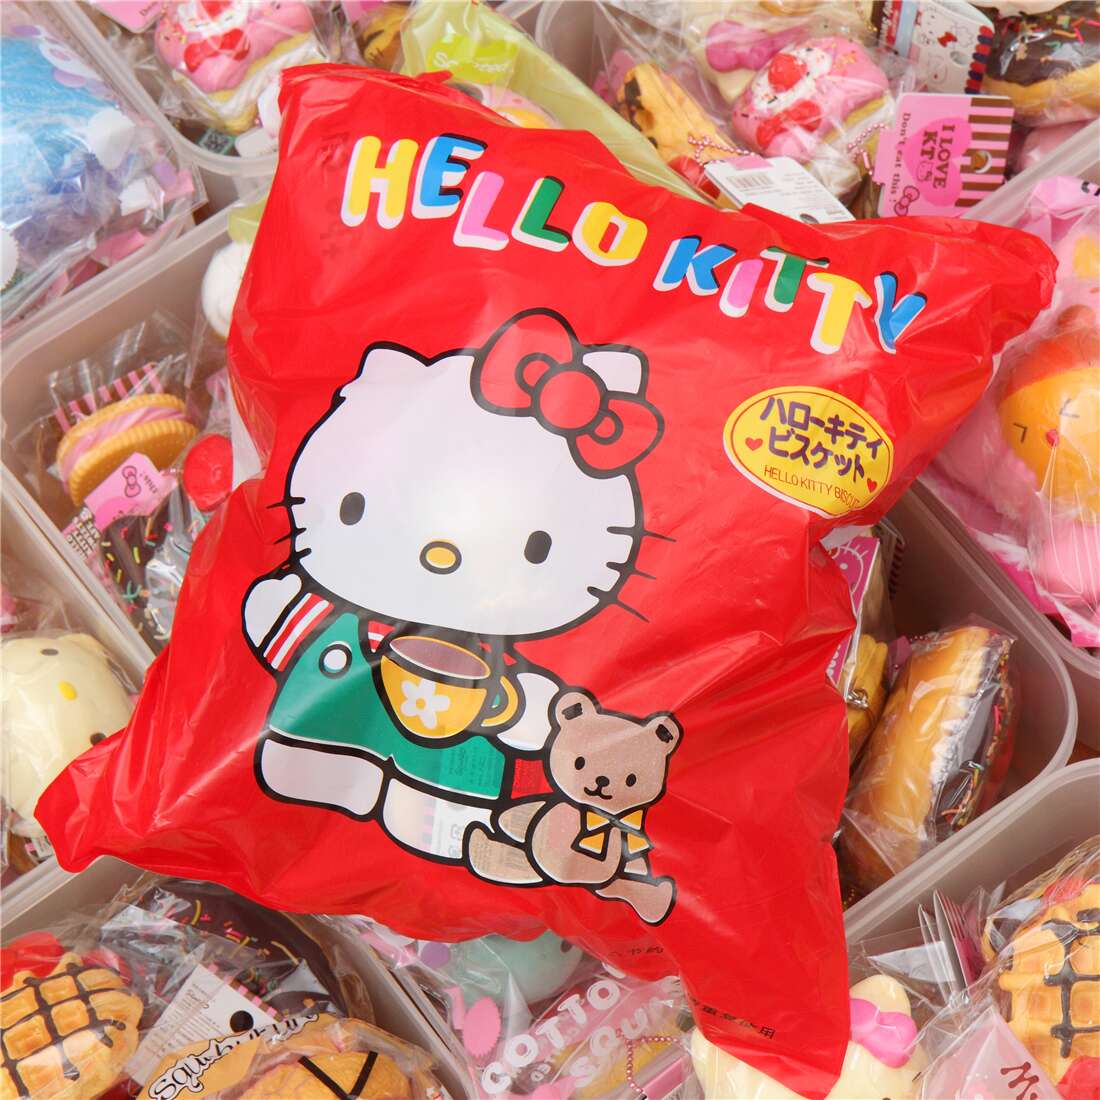 Huge Hello squishy bag by Hello Kitty - modeS4u